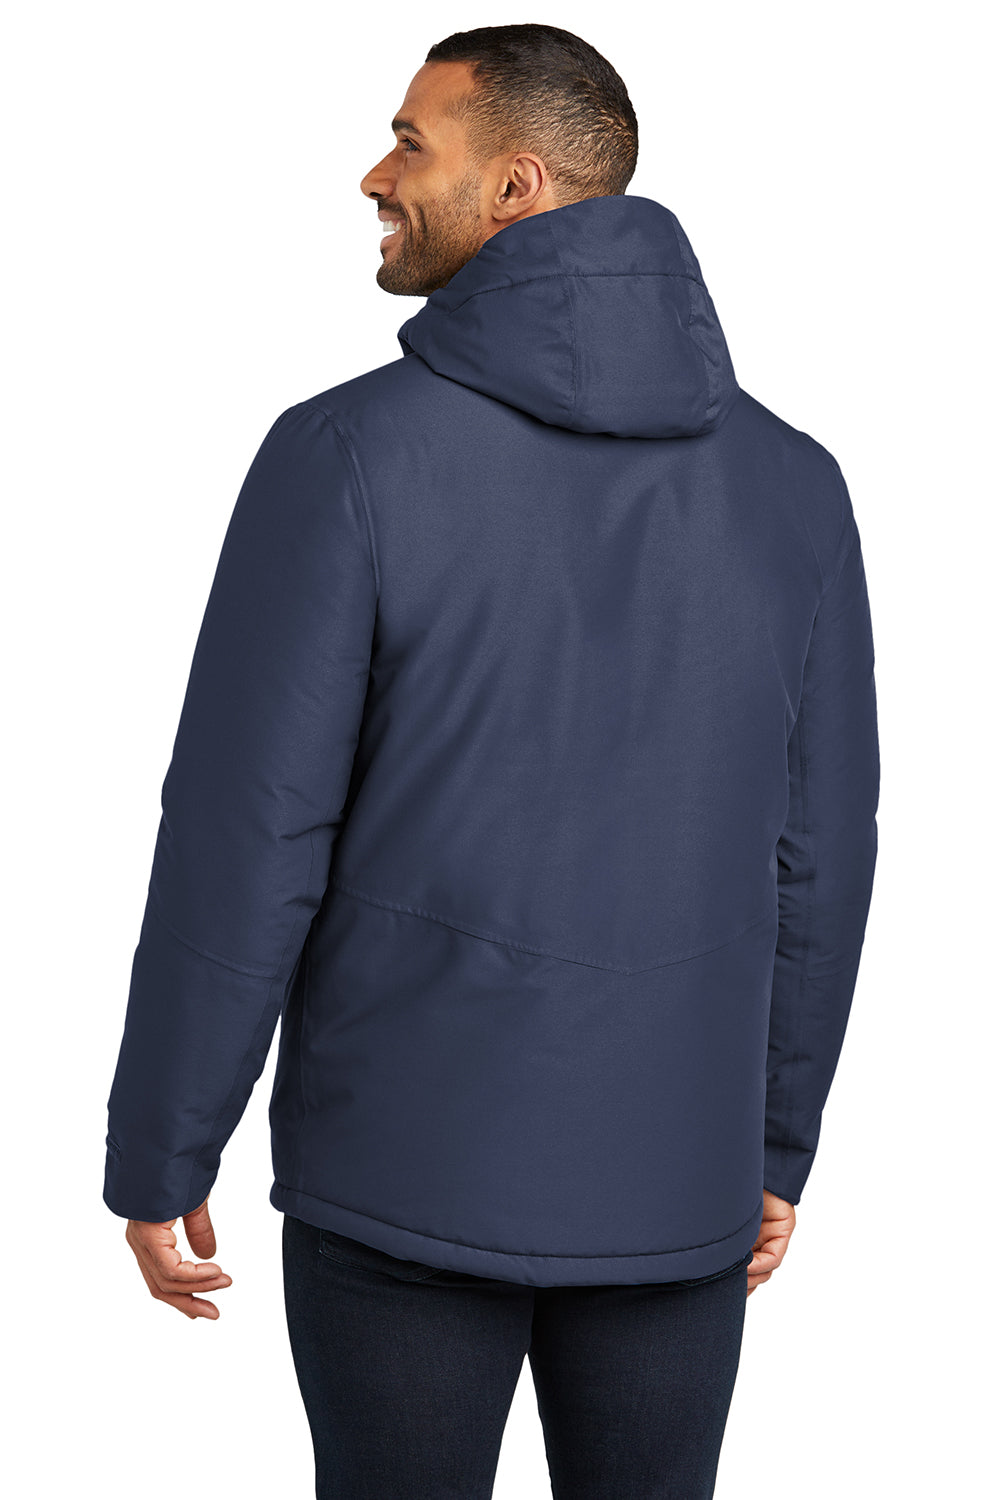 Port Authority J362 Mens Venture Waterproof Insulated Full Zip Hooded Jacket Dress Navy Blue Back